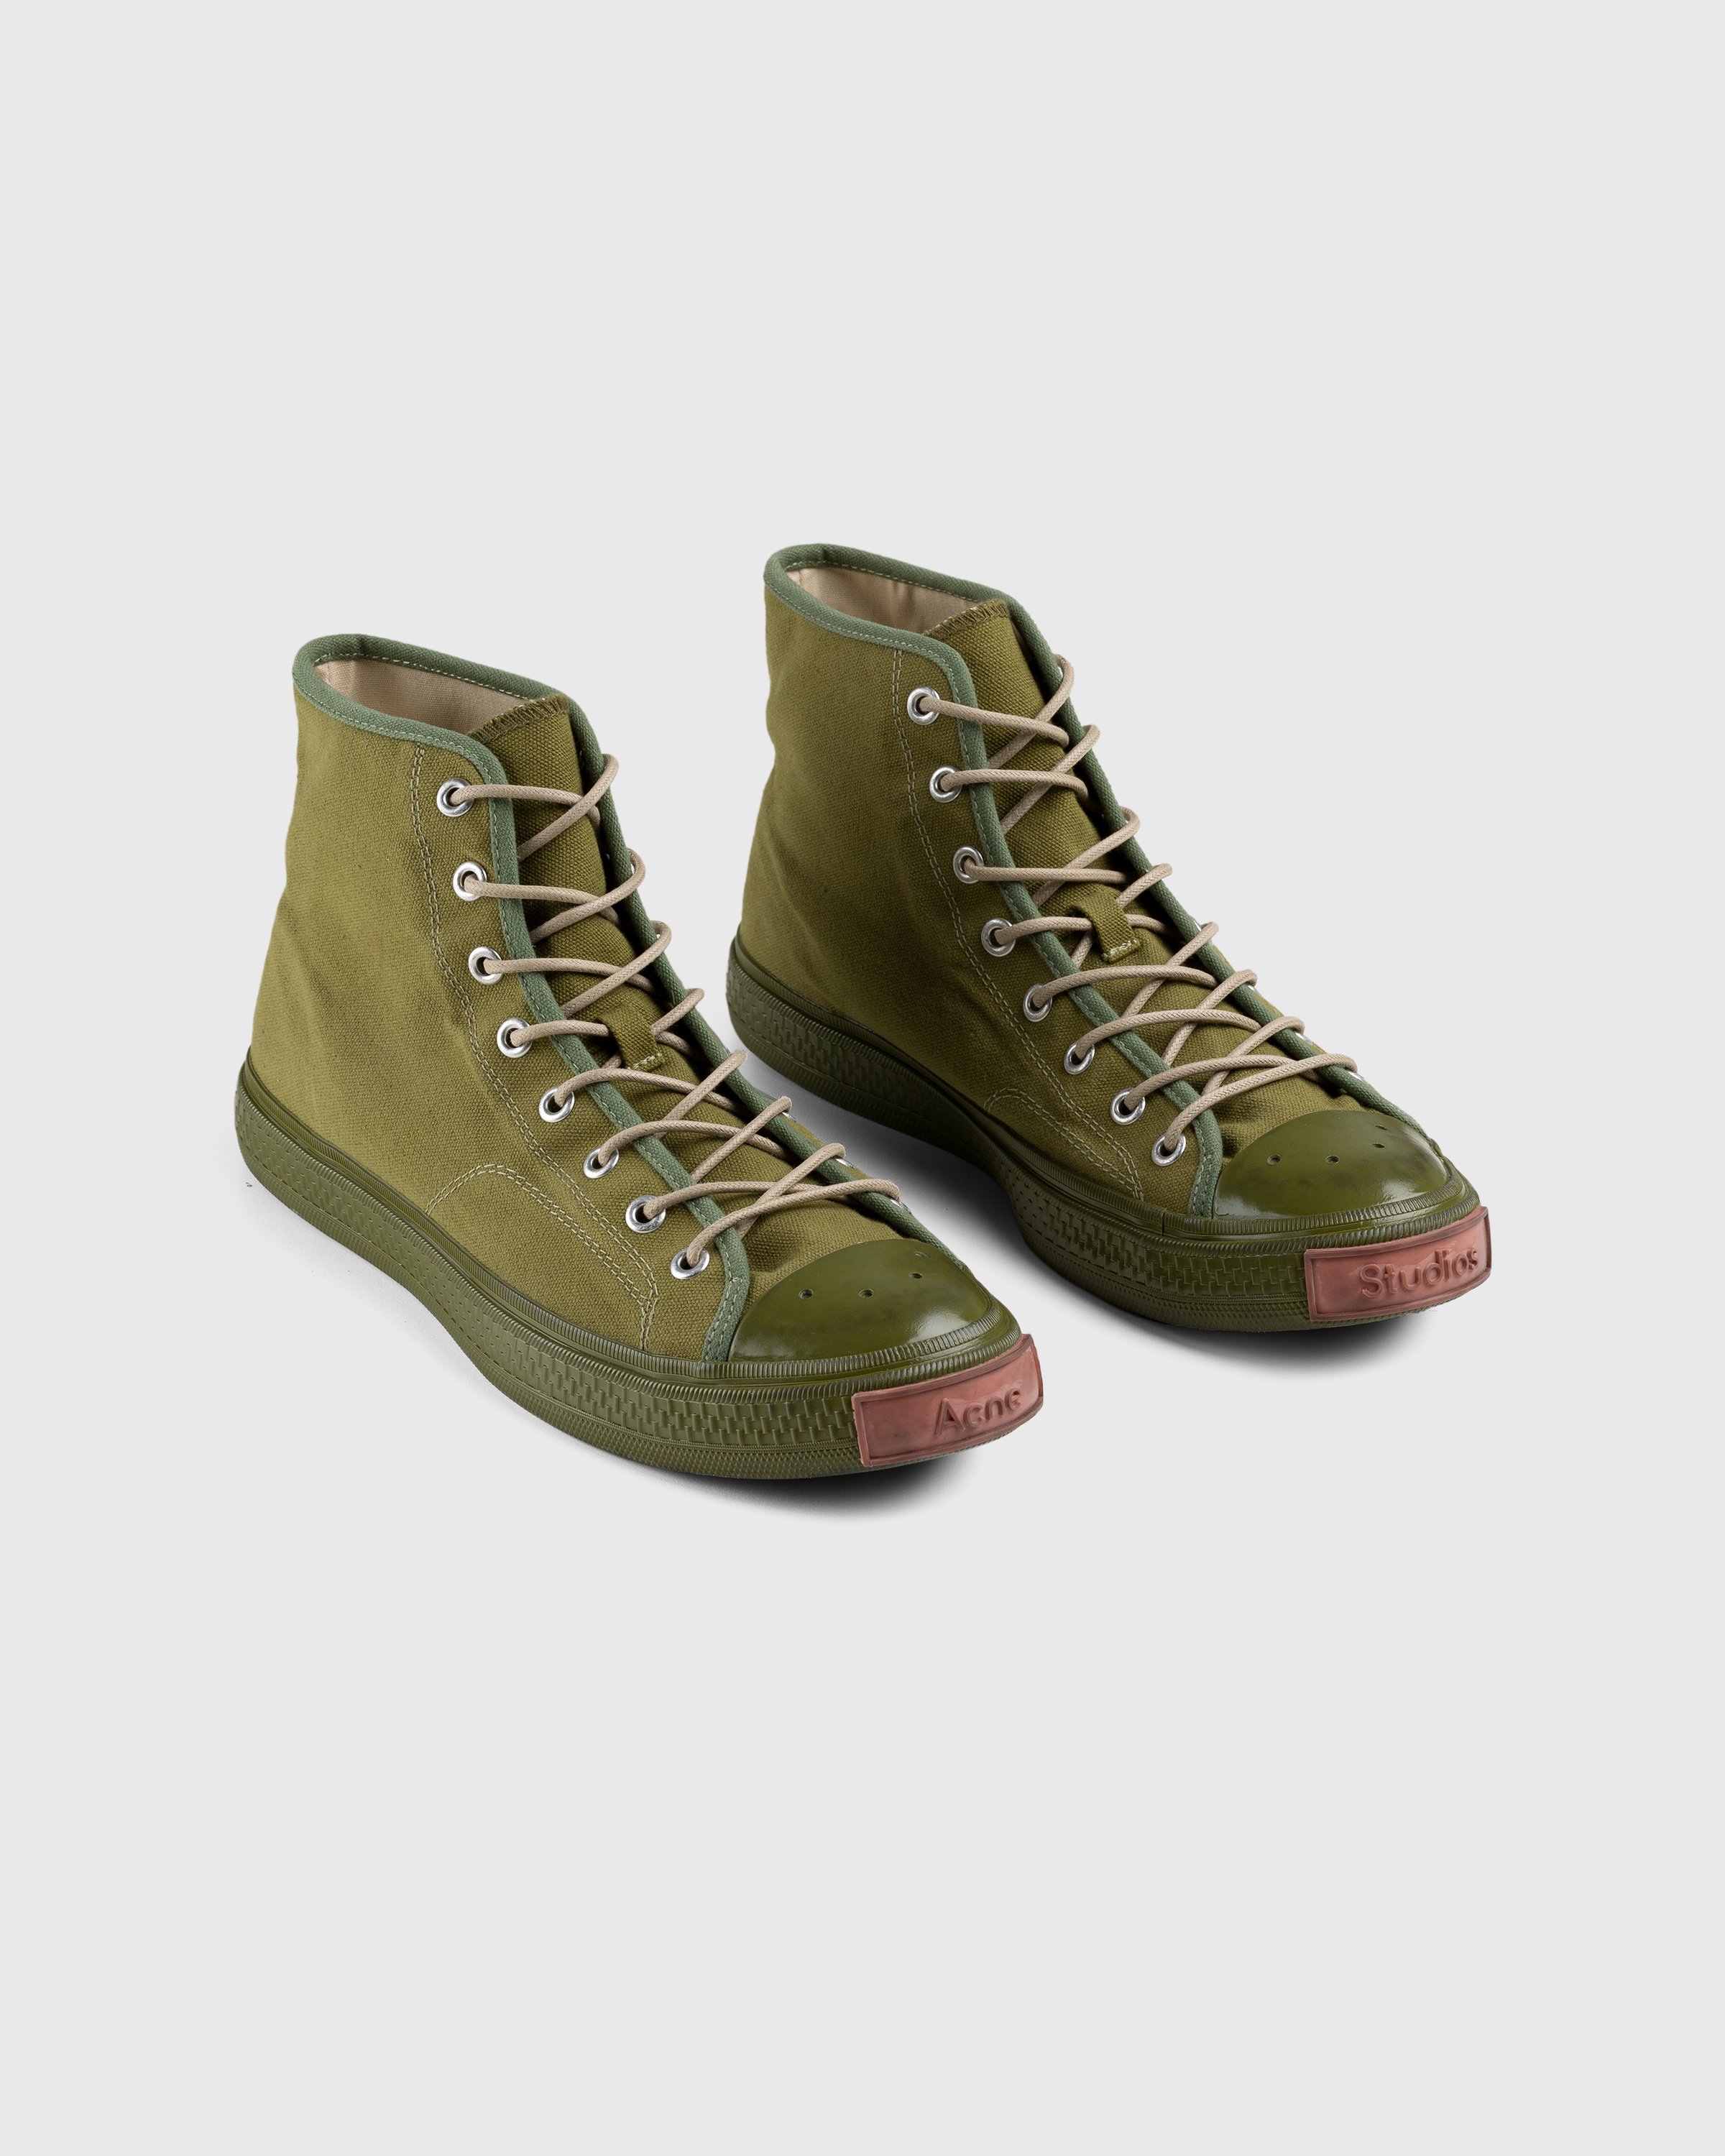 Acne Studios - Ballow High-Top Sneakers Olive Green - Footwear - Green - Image 3